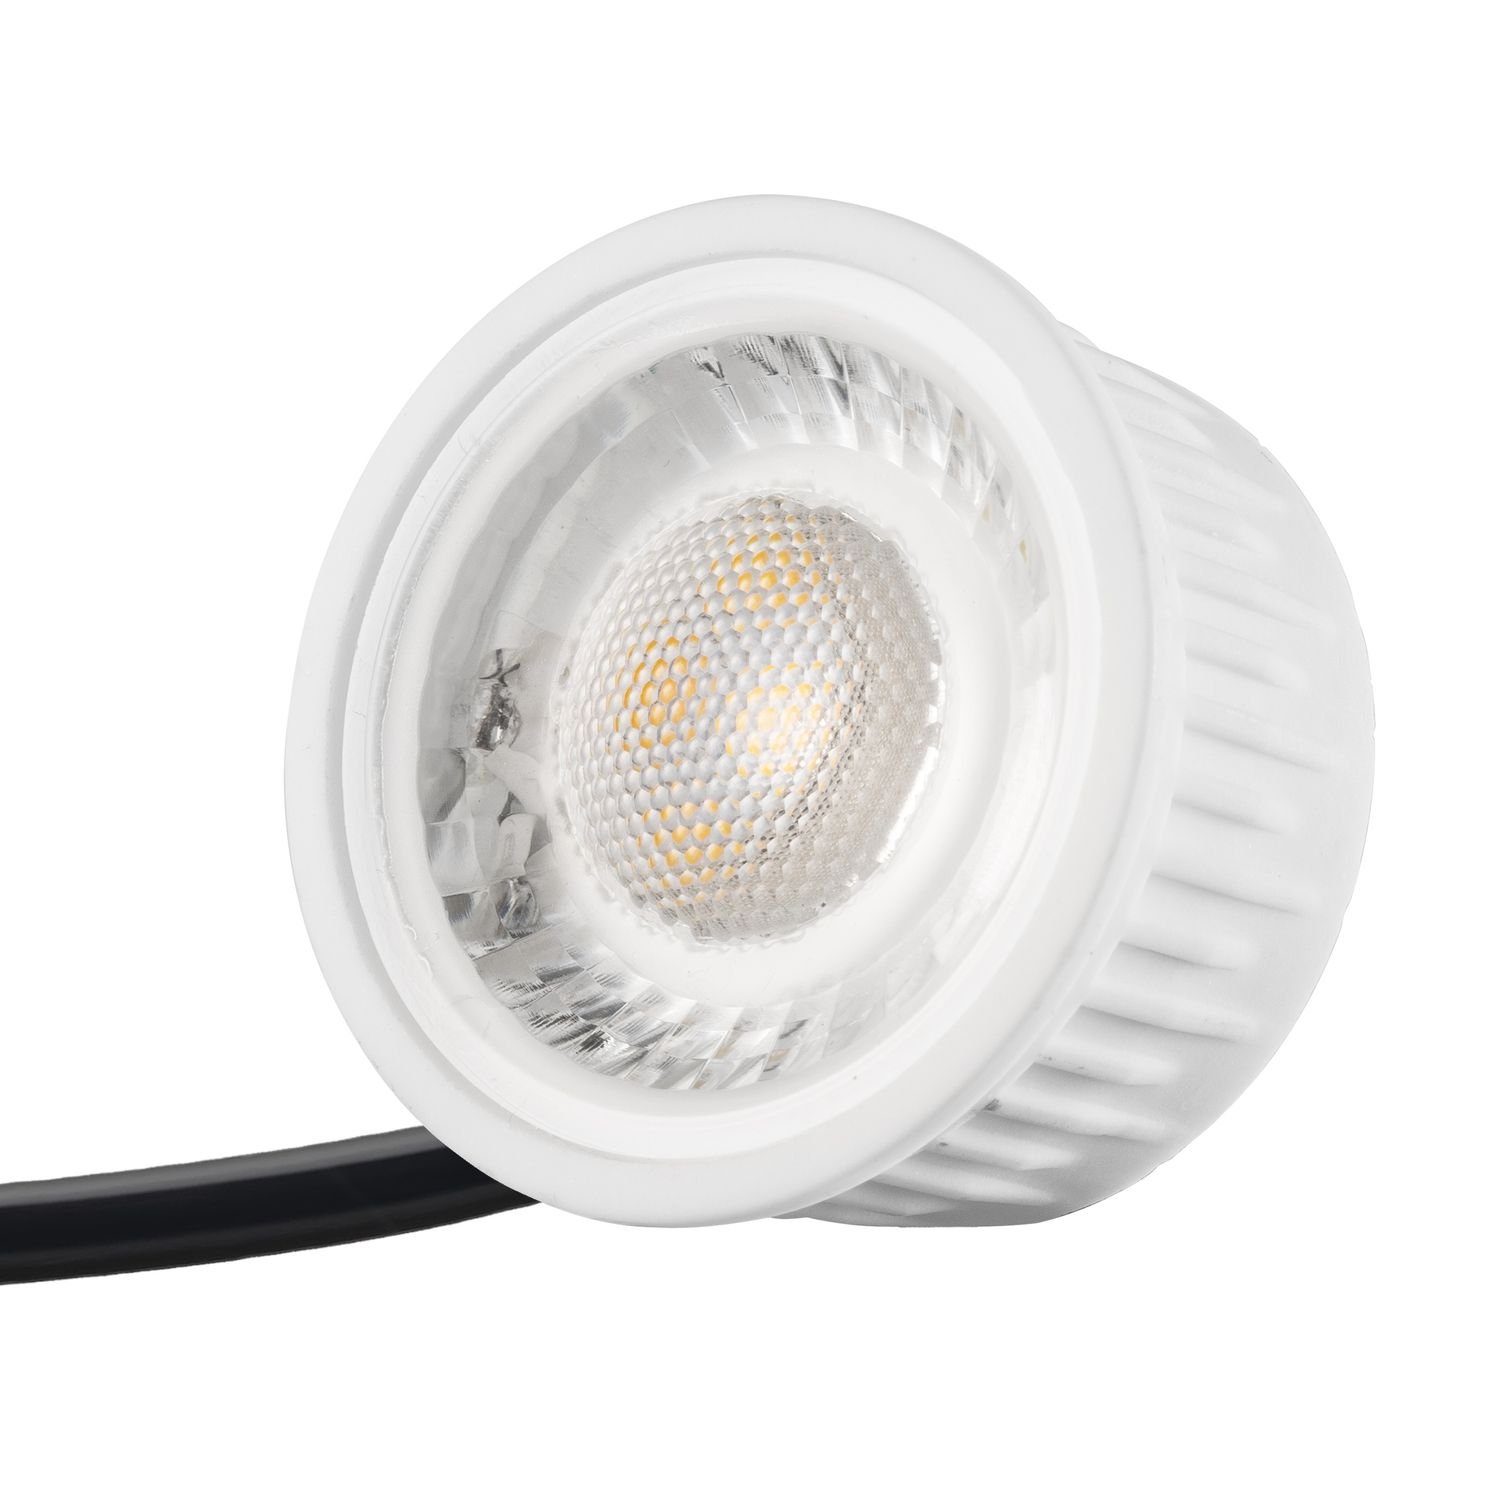 LEDANDO LED Einbaustrahler IP65 LED v flach Leuchtmittel Einbaustrahler extra Set in chrom mit 5W